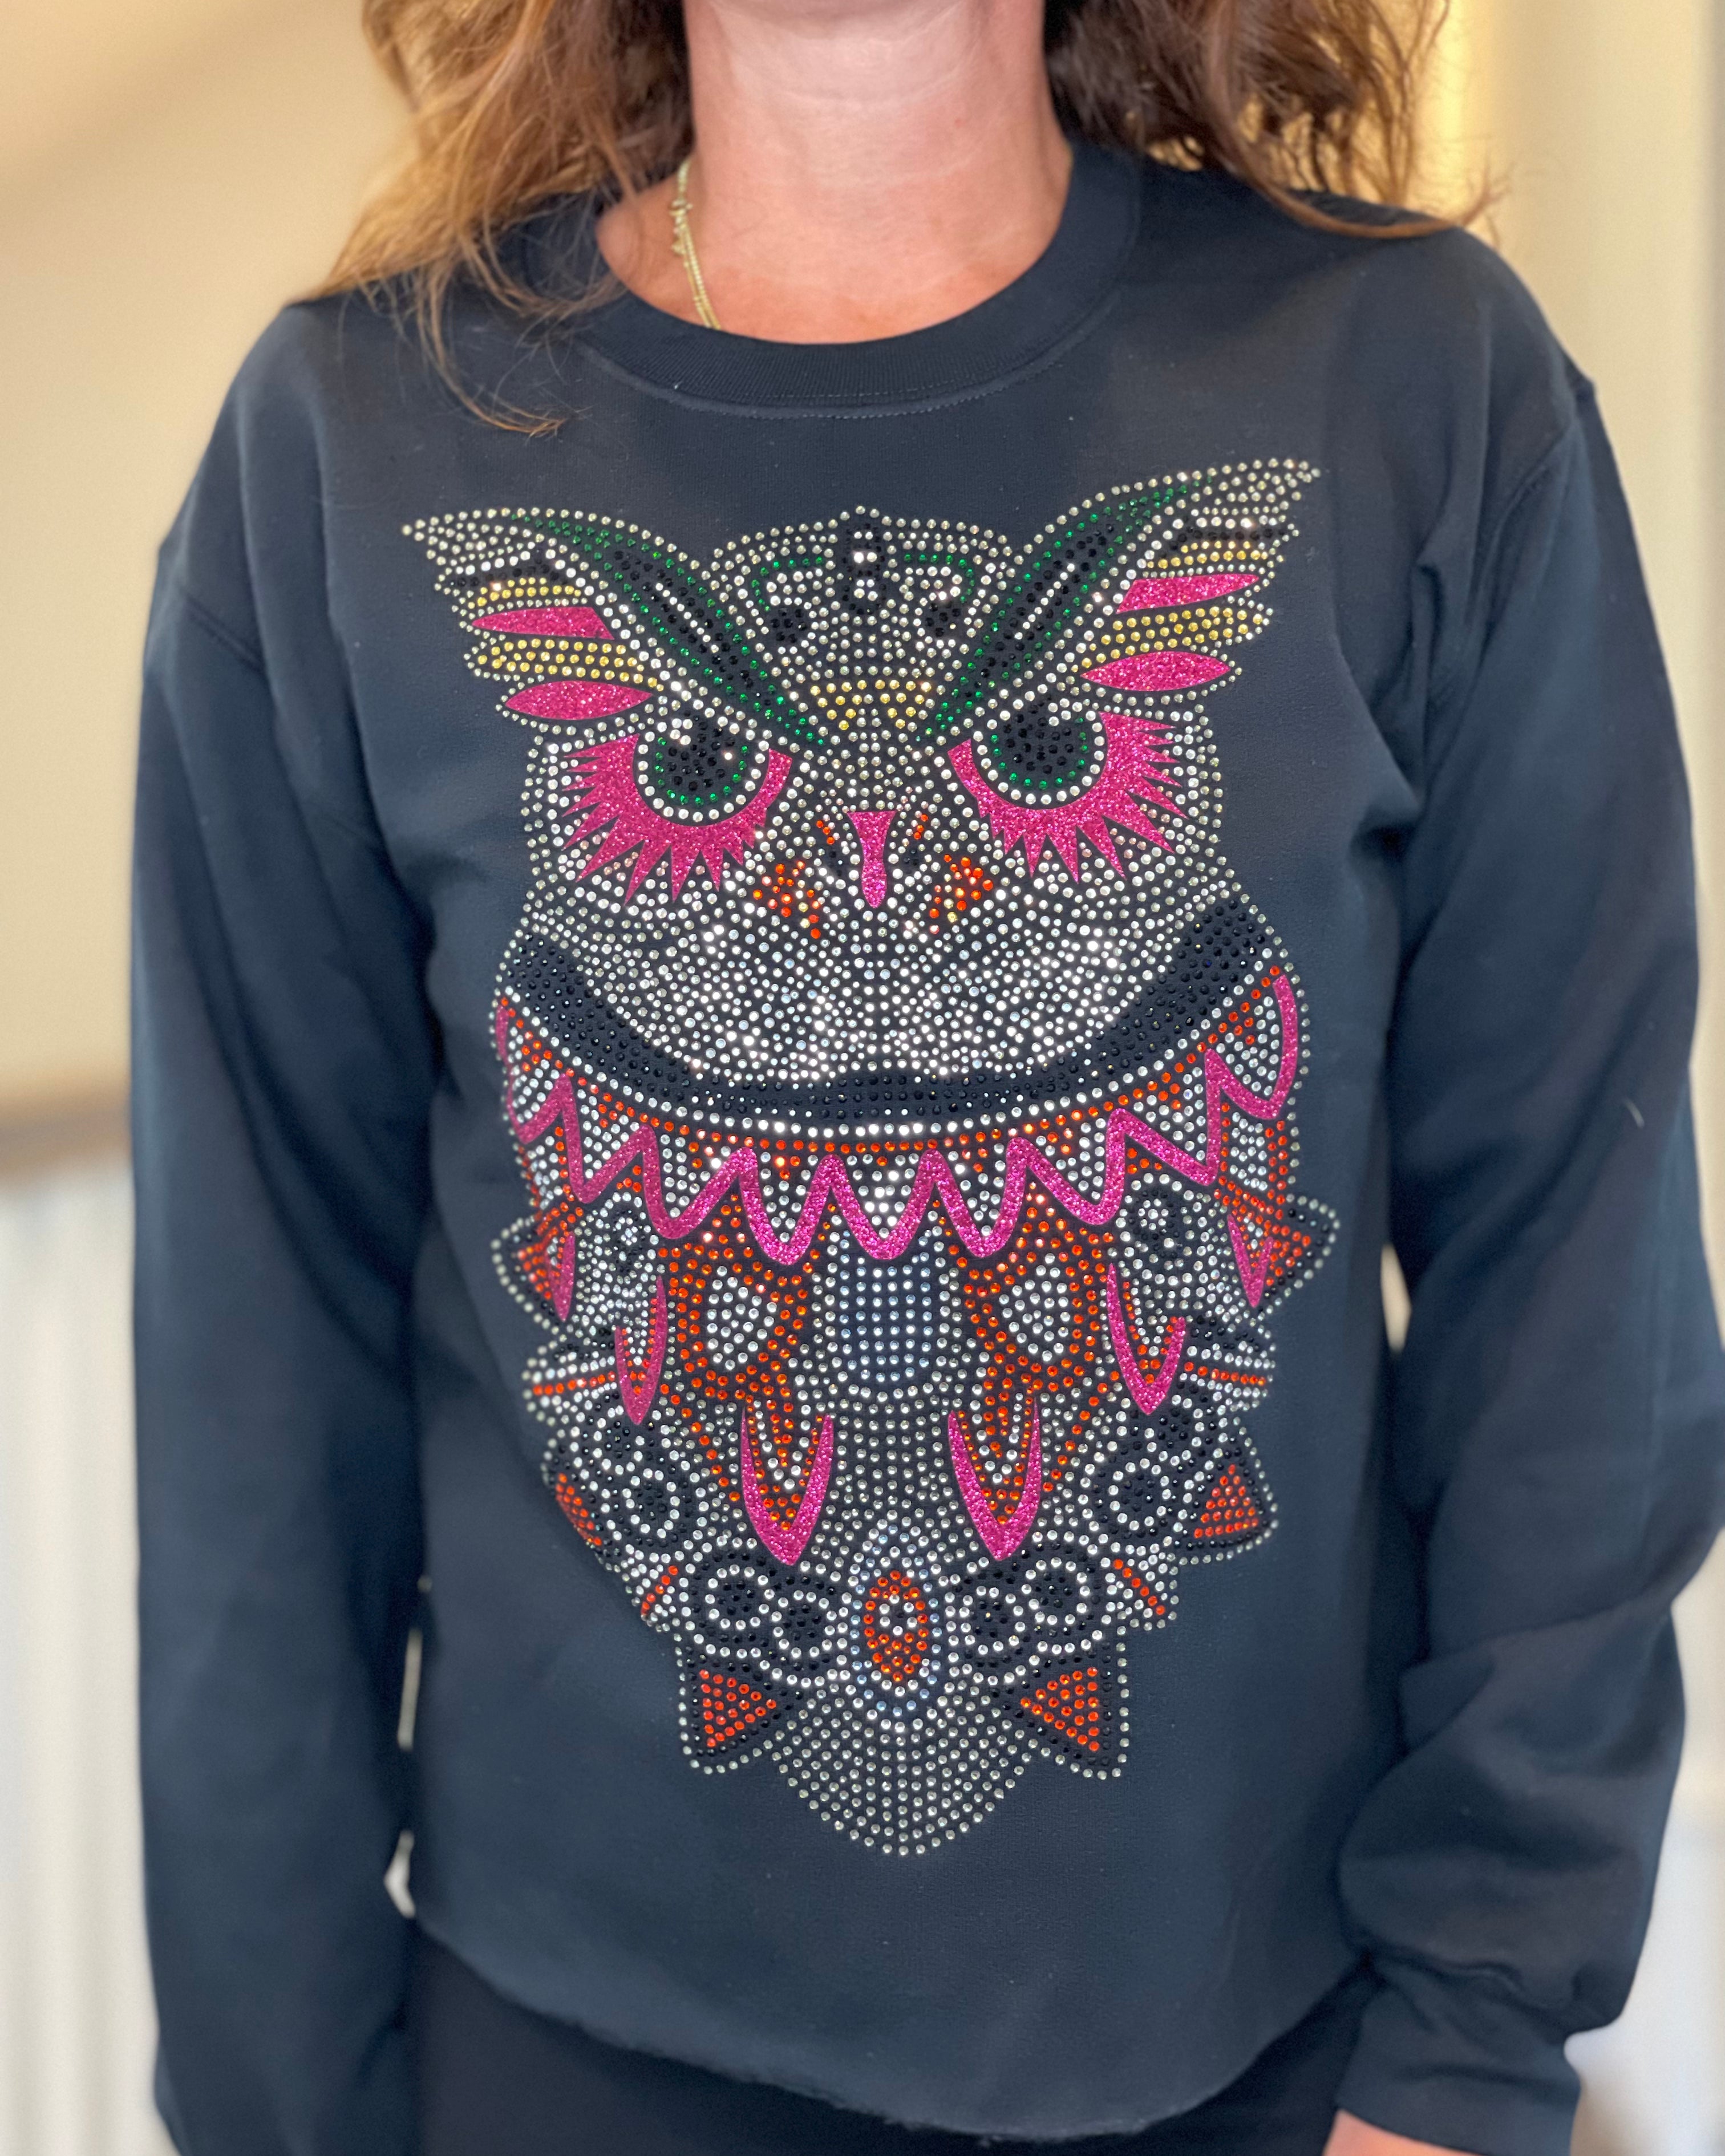 Rhinestone Owl Sweatshirt in Black.